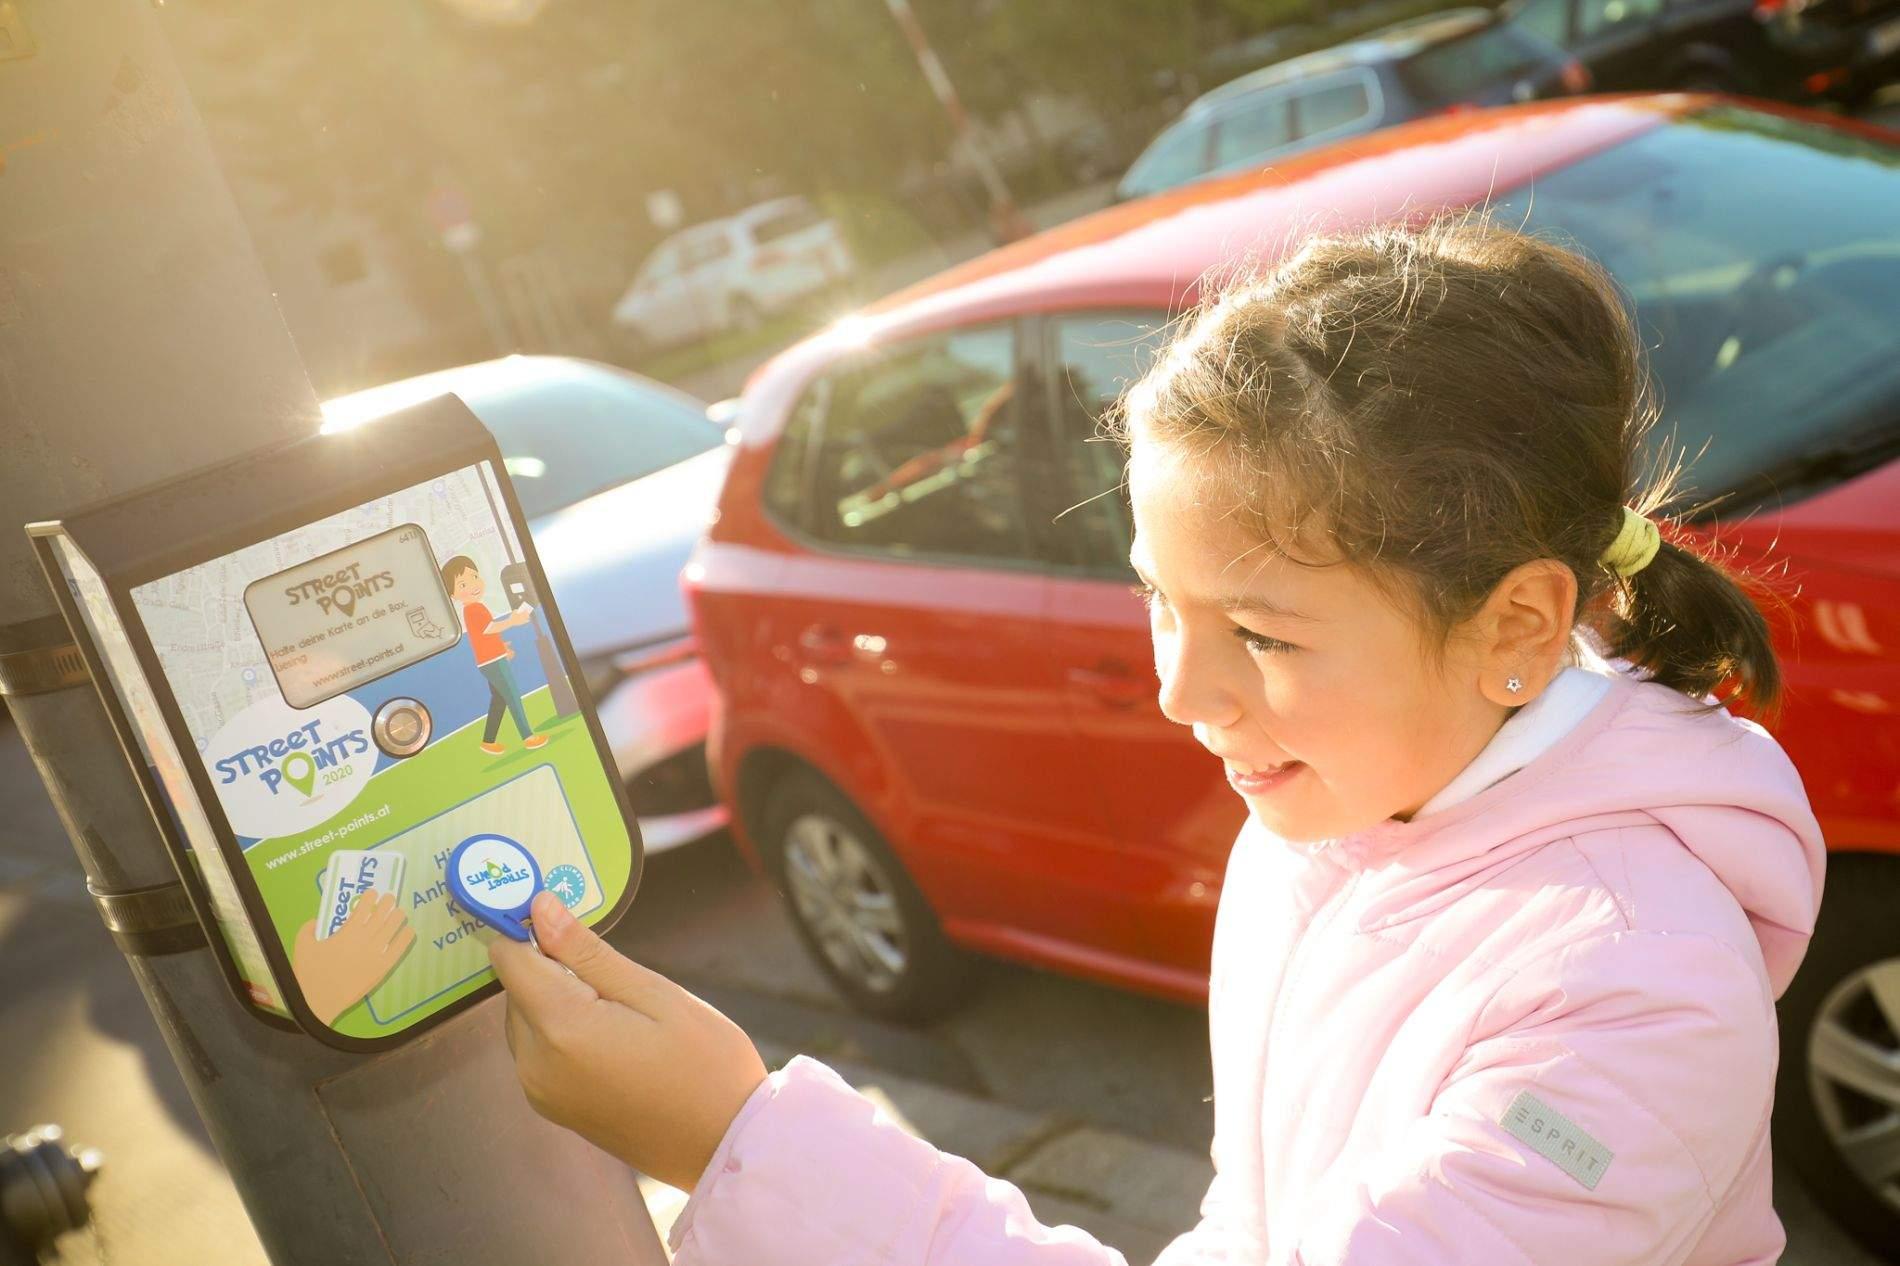 Cilj igre “Street Points” je uvođenje više fizičke aktivnosti kod djece - Avaz